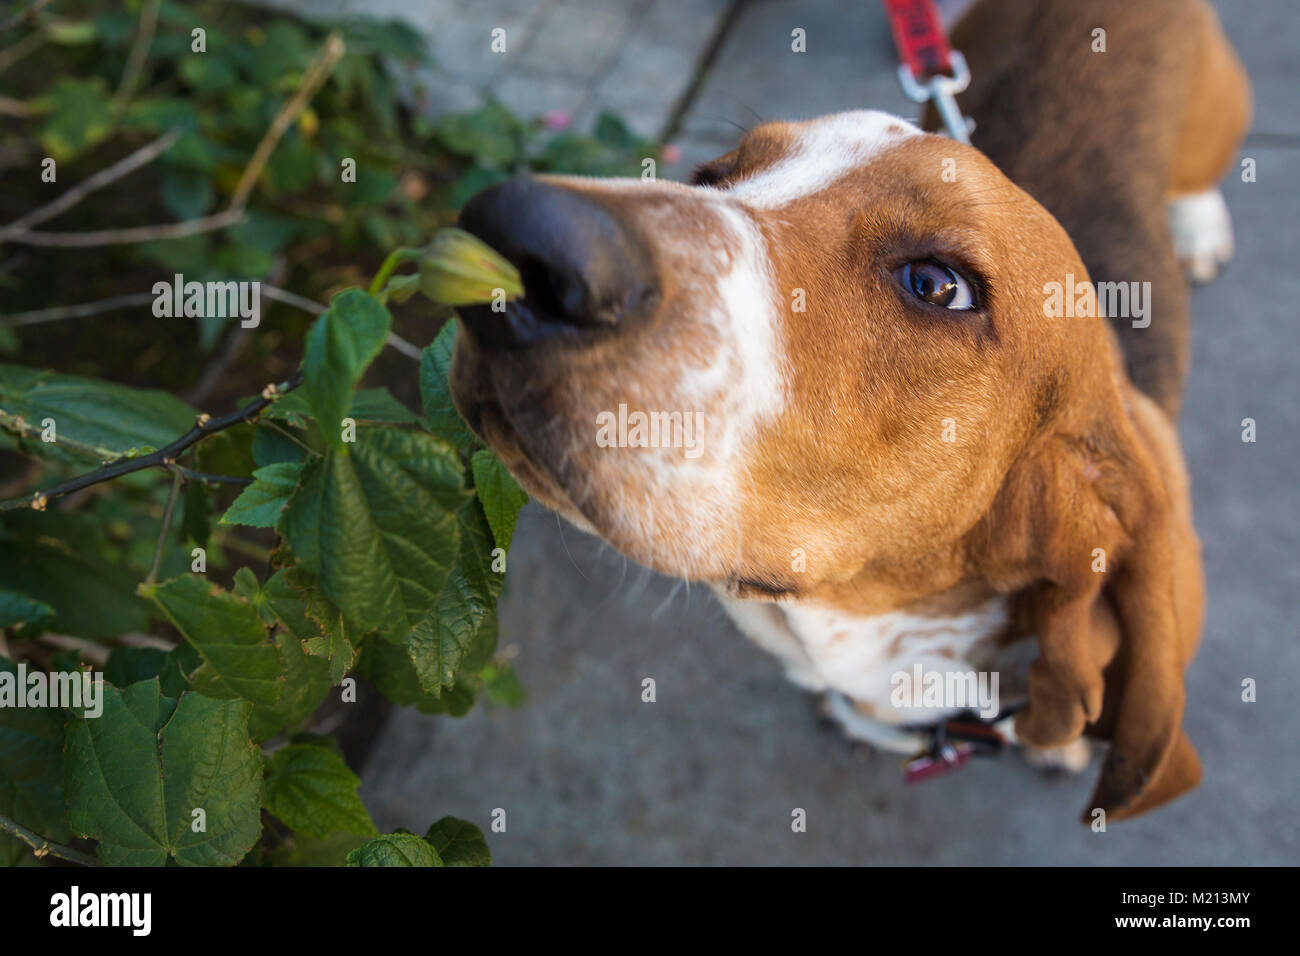 Basset Hound dog smelling plant Stock Photo